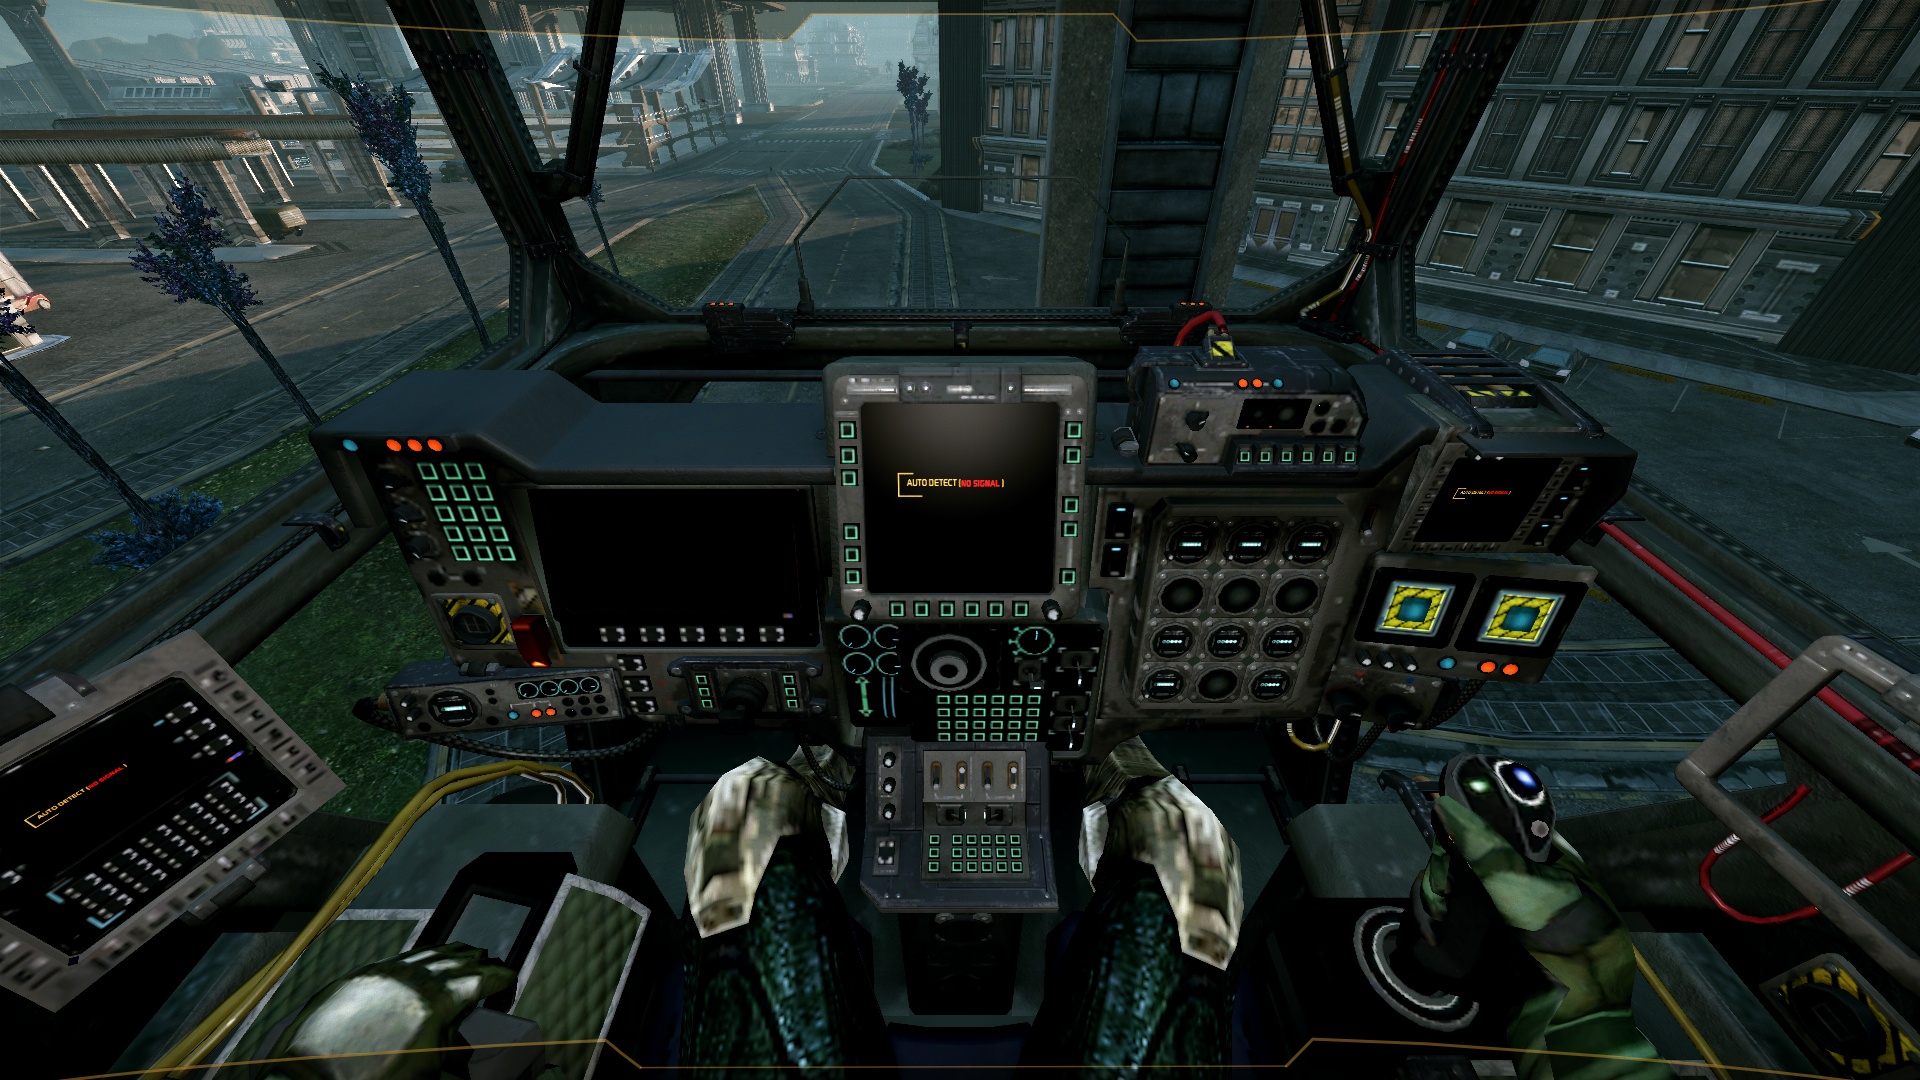 gundam cockpit simulation